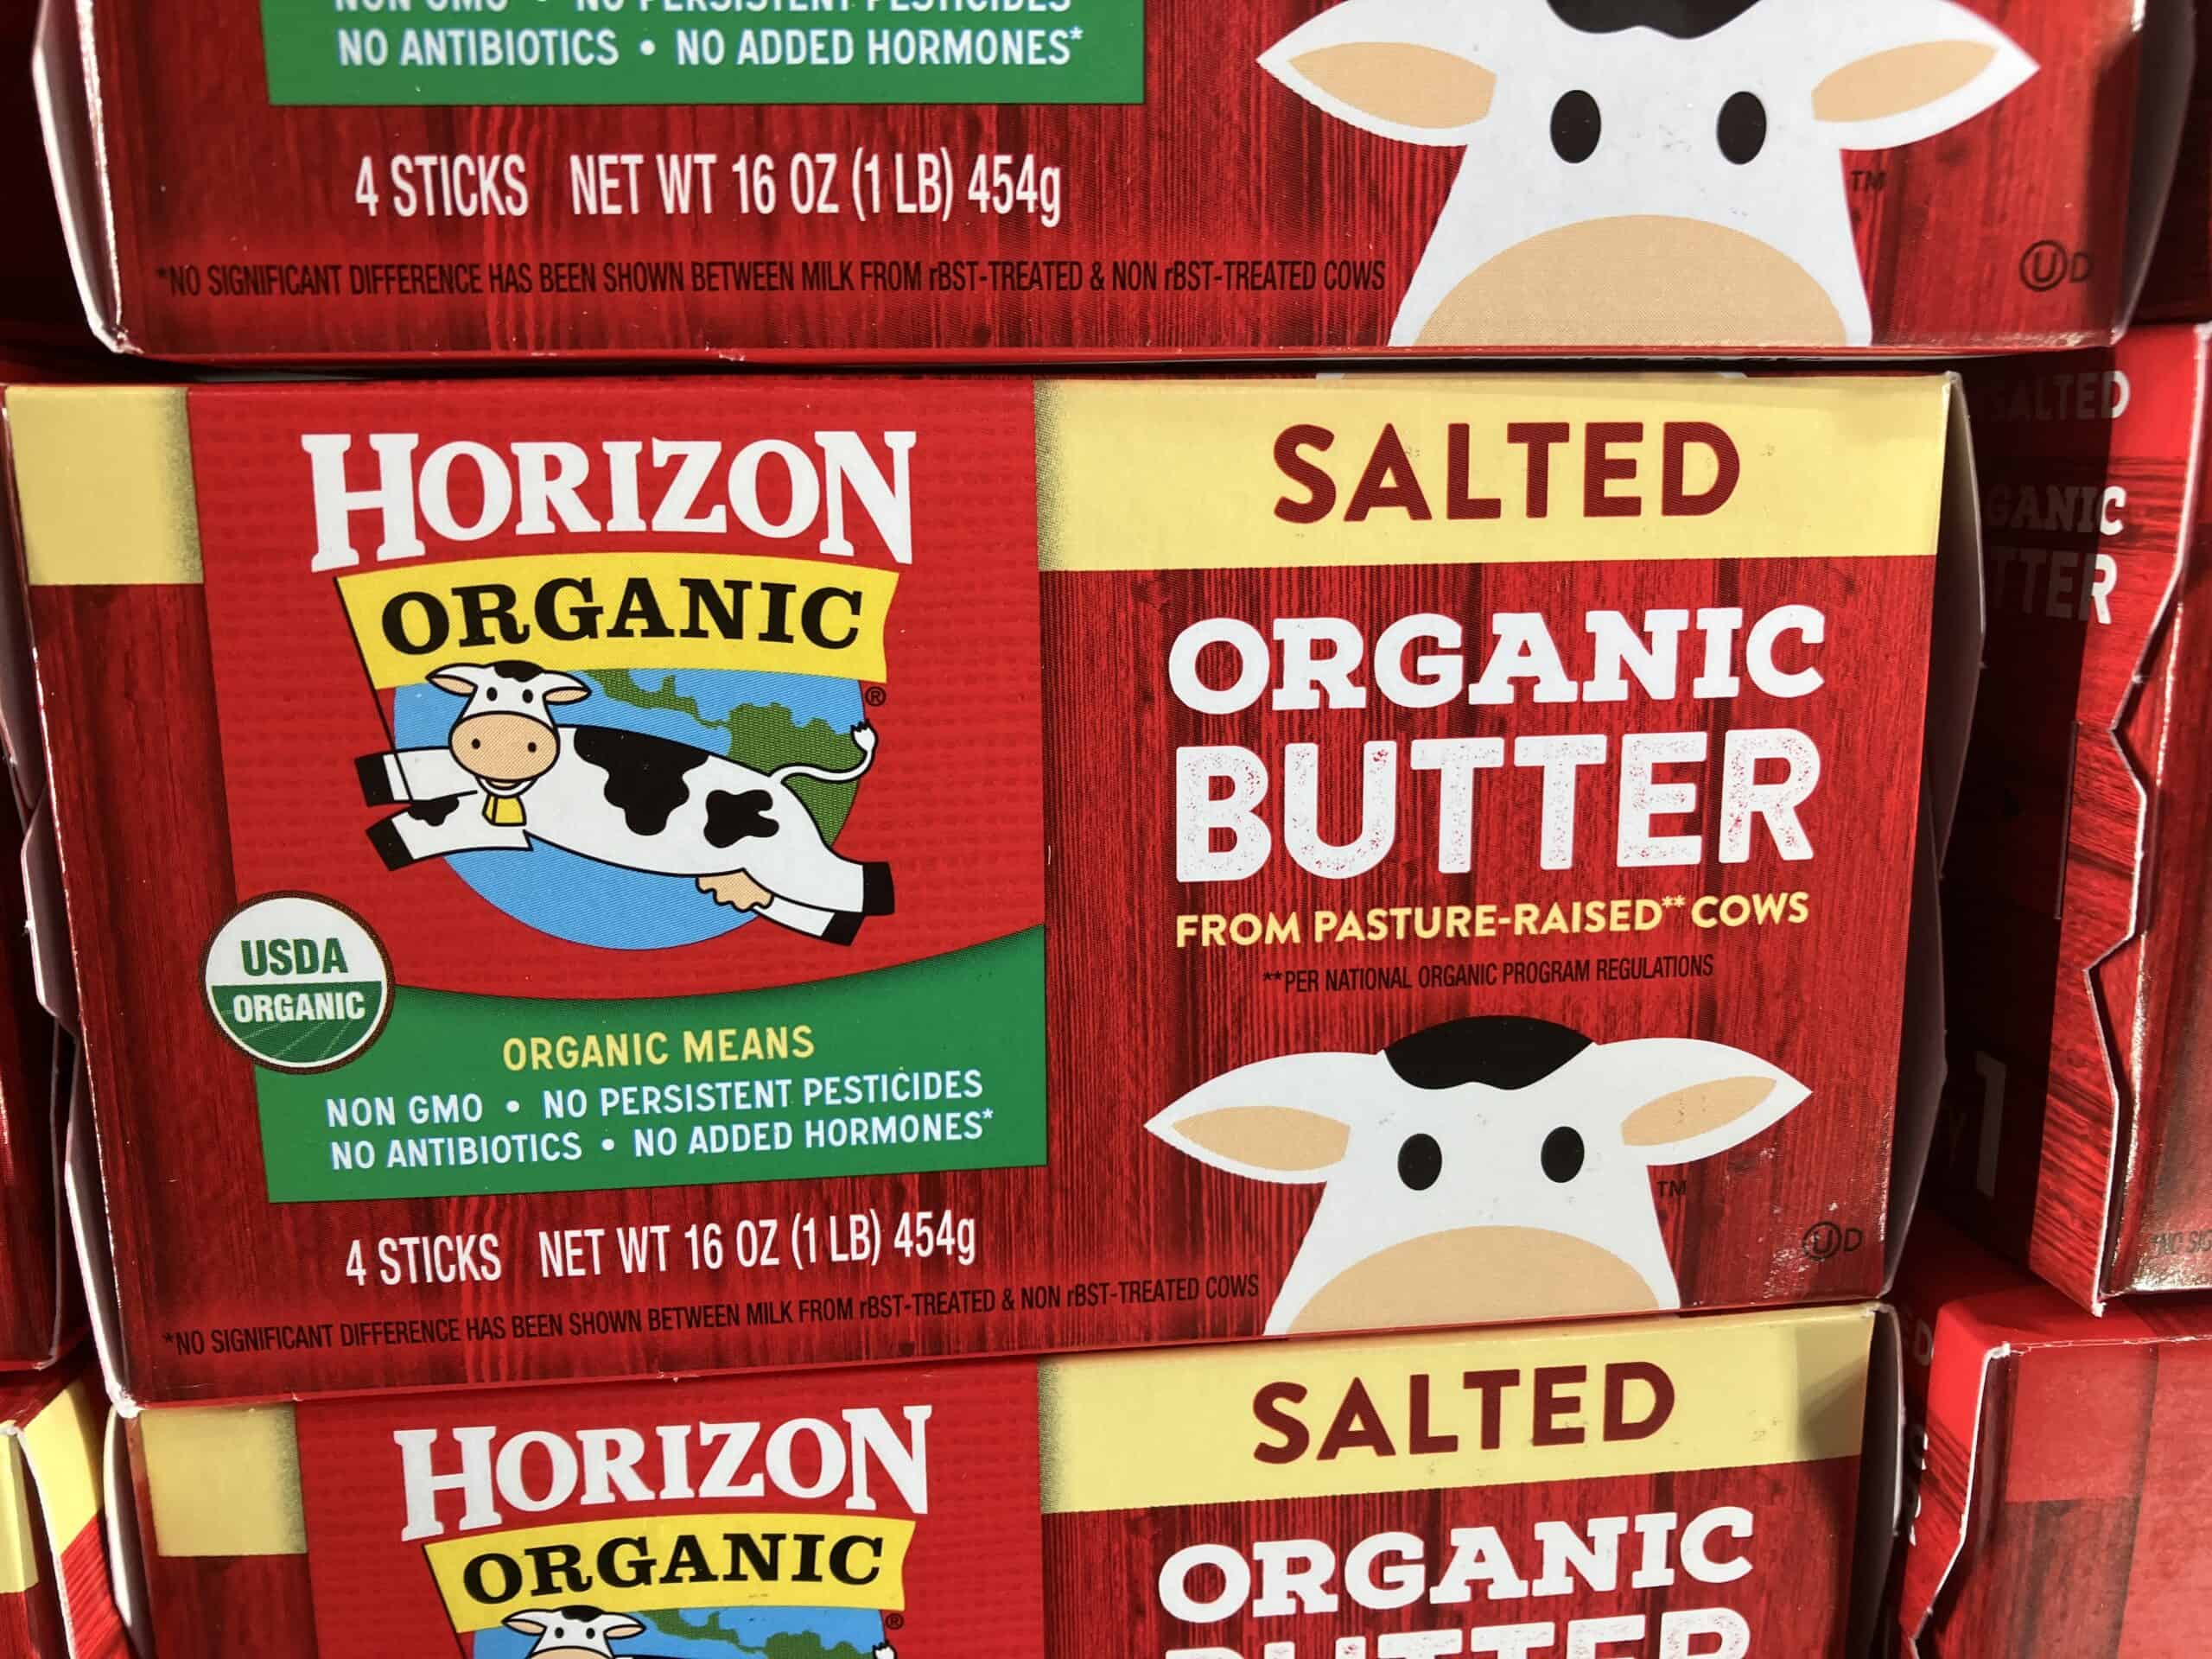 Horizon Organic butter